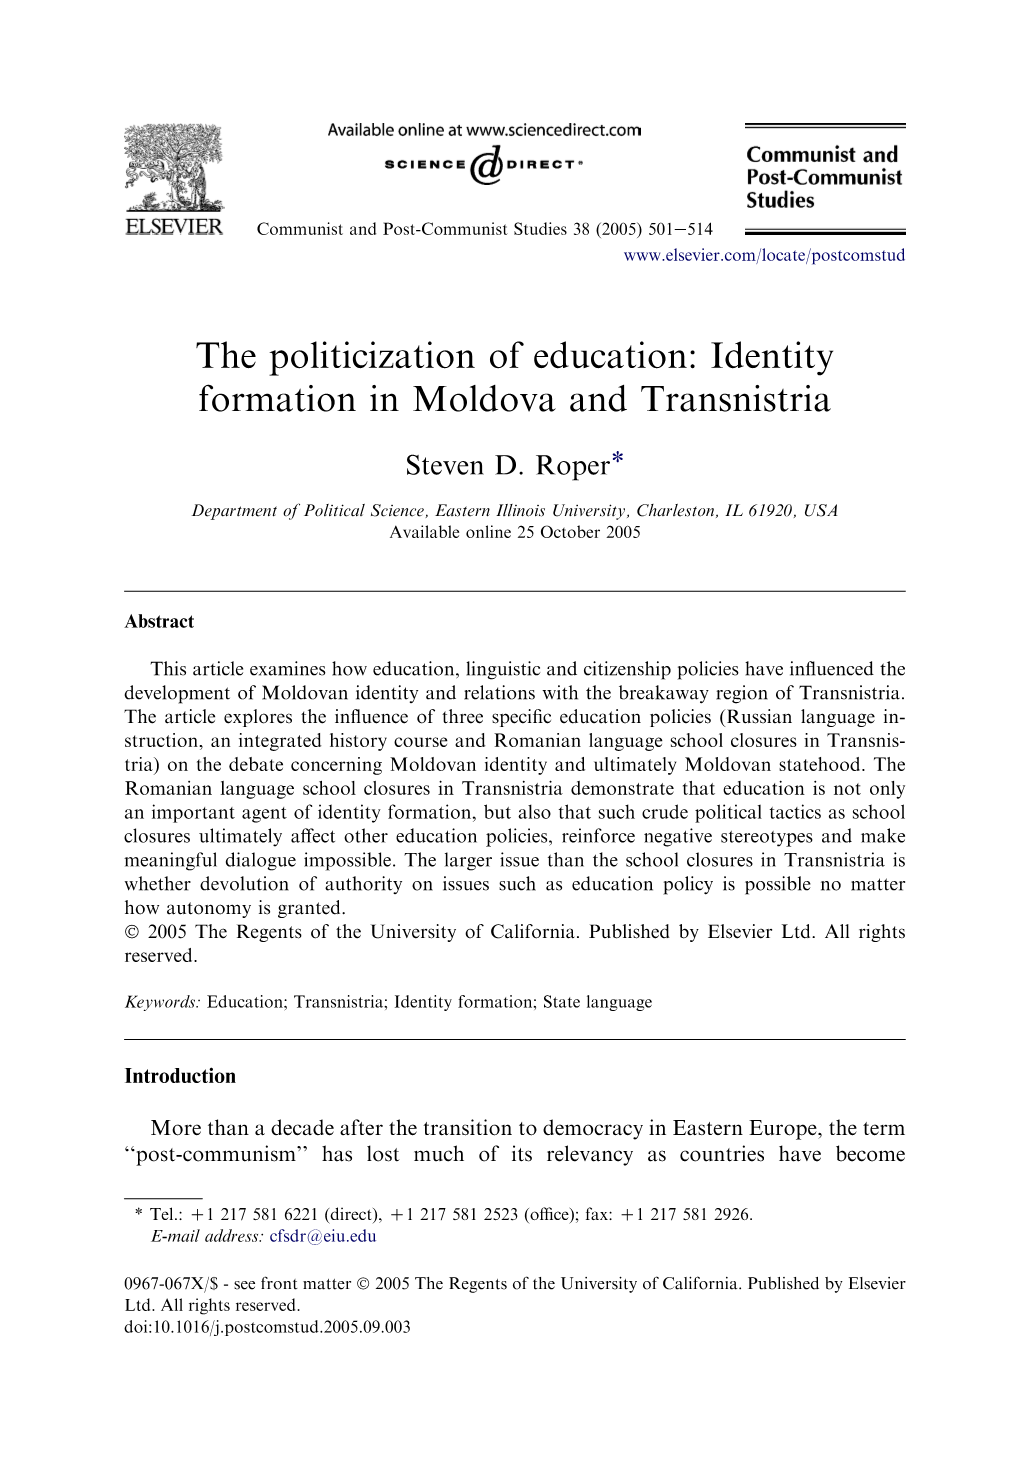 The Politicization of Education: Identity Formation in Moldova and Transnistria